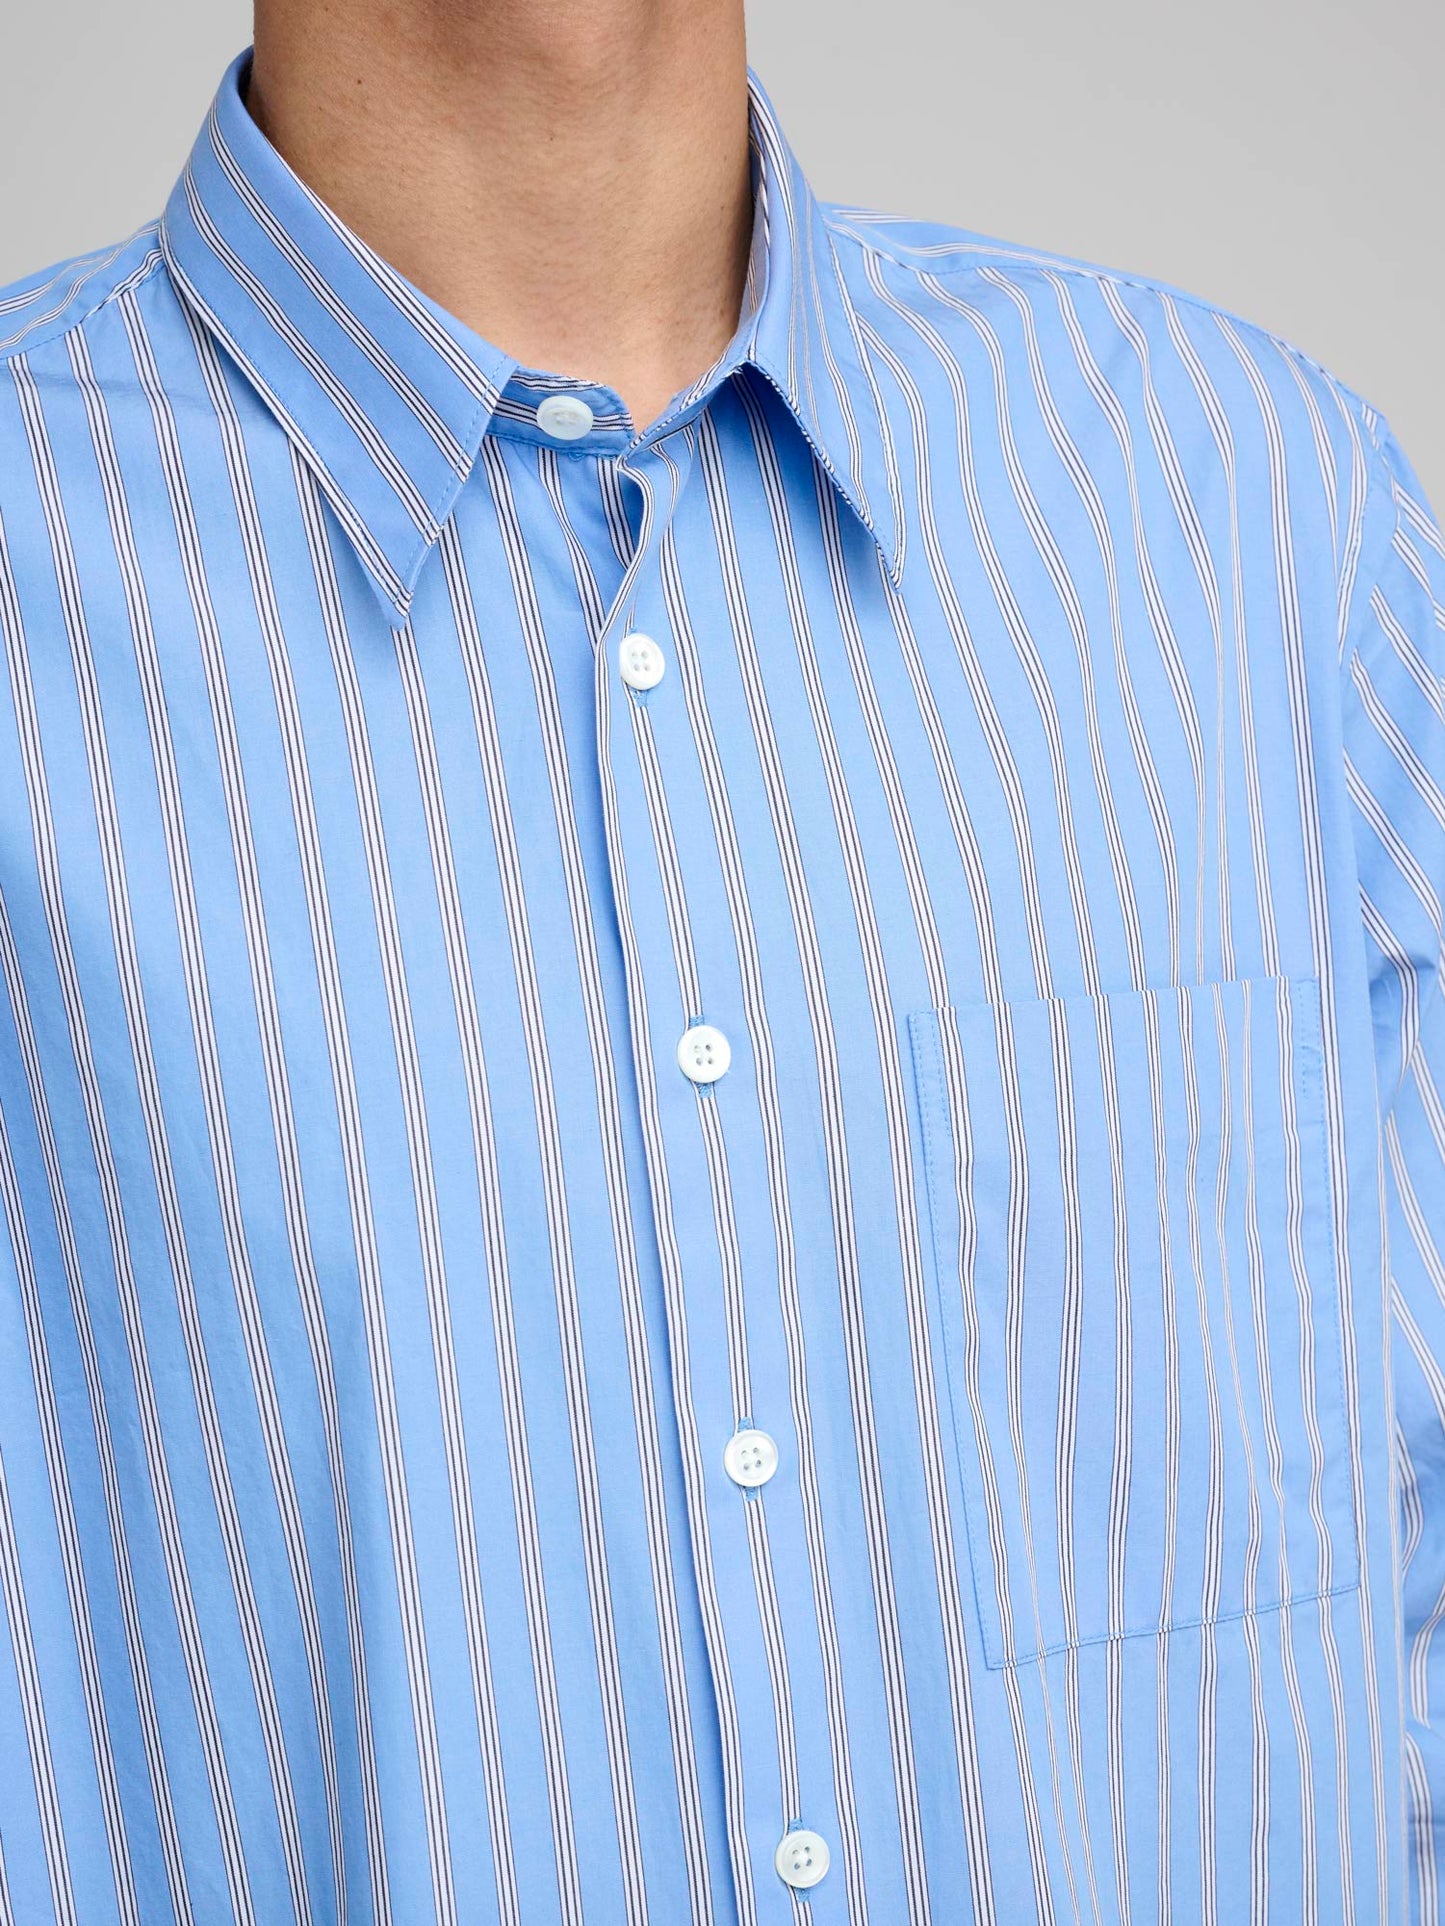 Ace Shirt, Light Blue Stripe